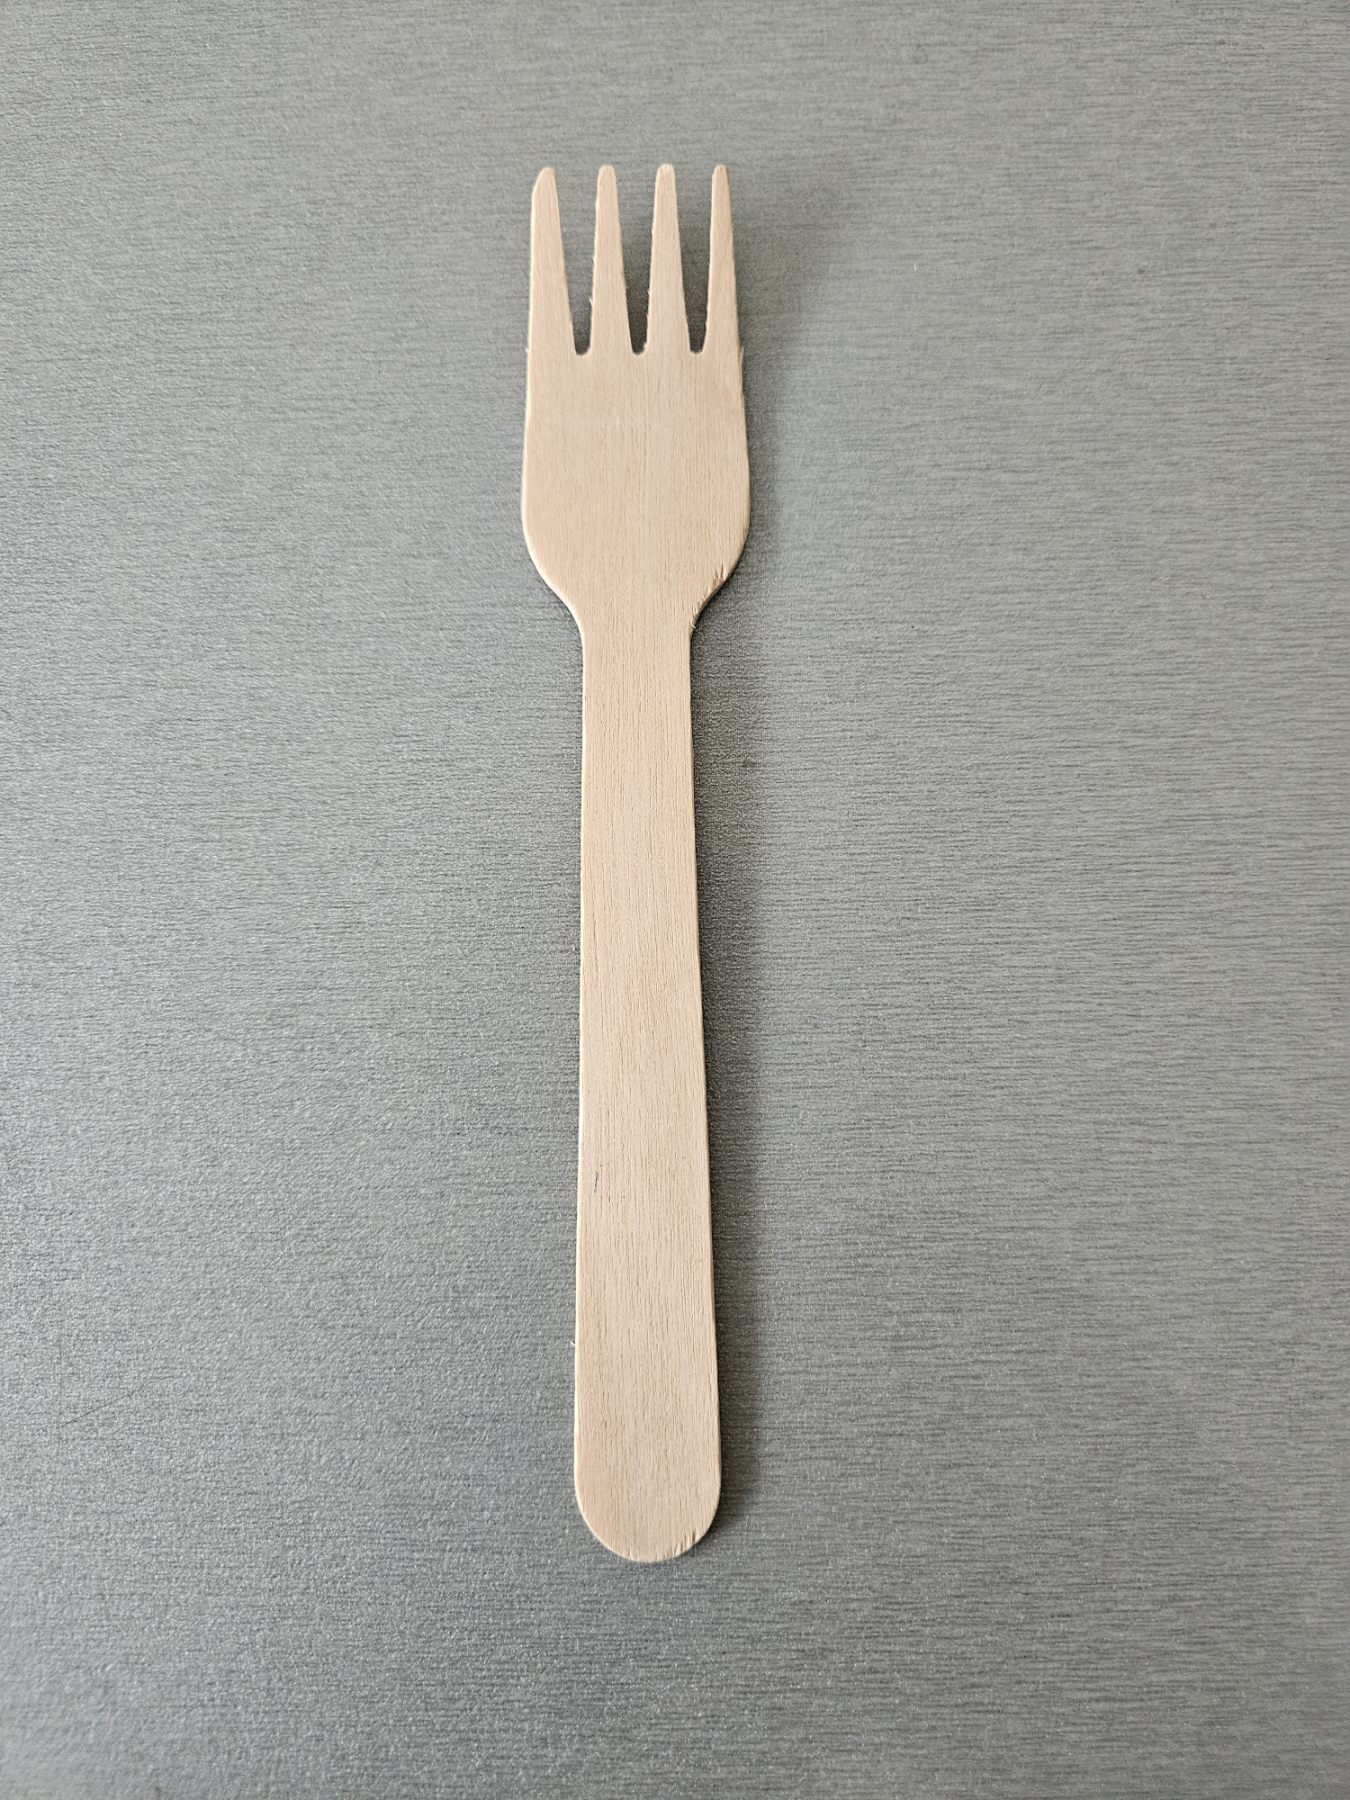 Bragio Plastics - Wooden forks